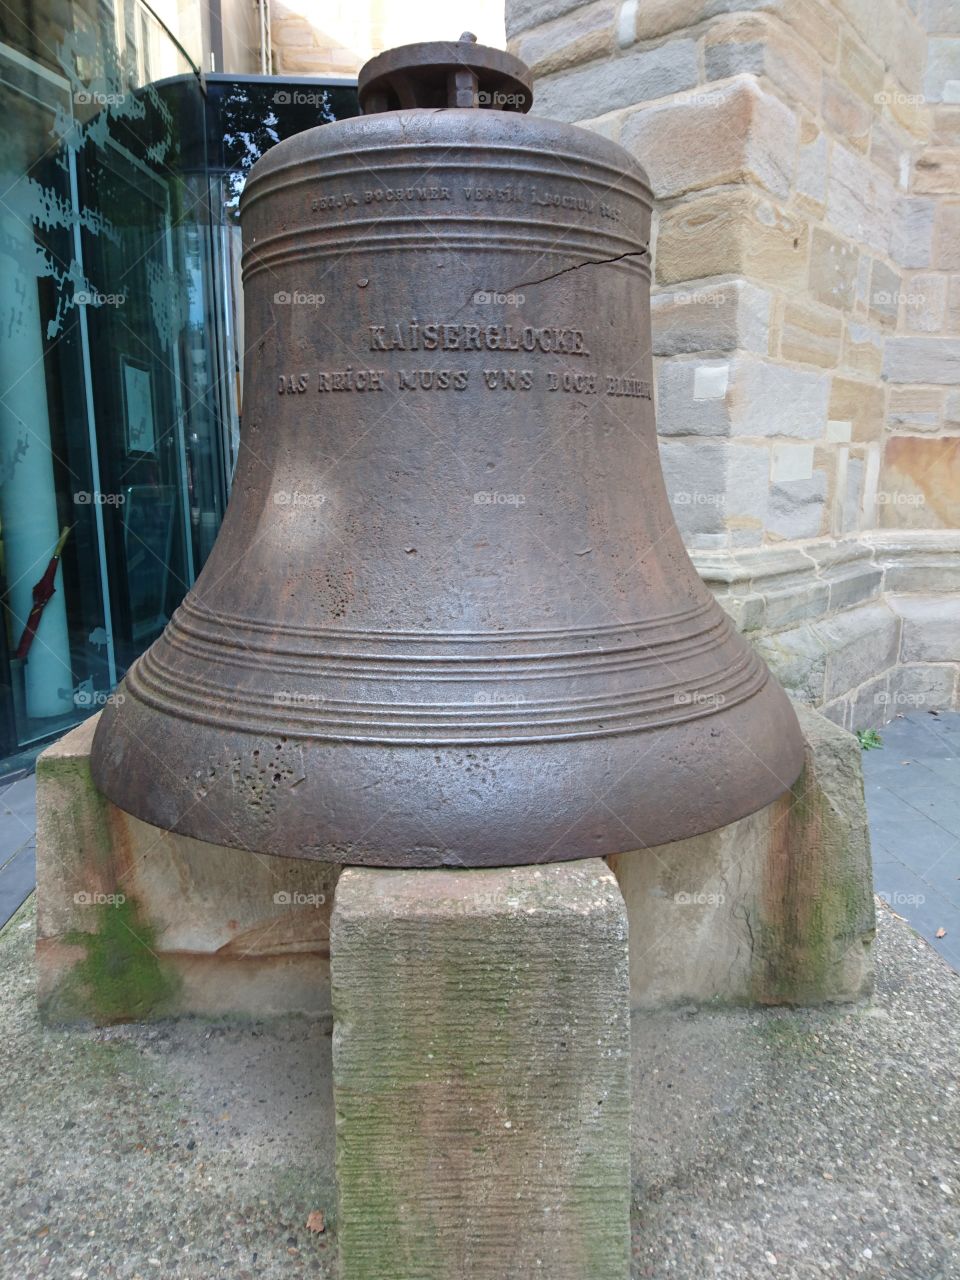 church bell of dortmund